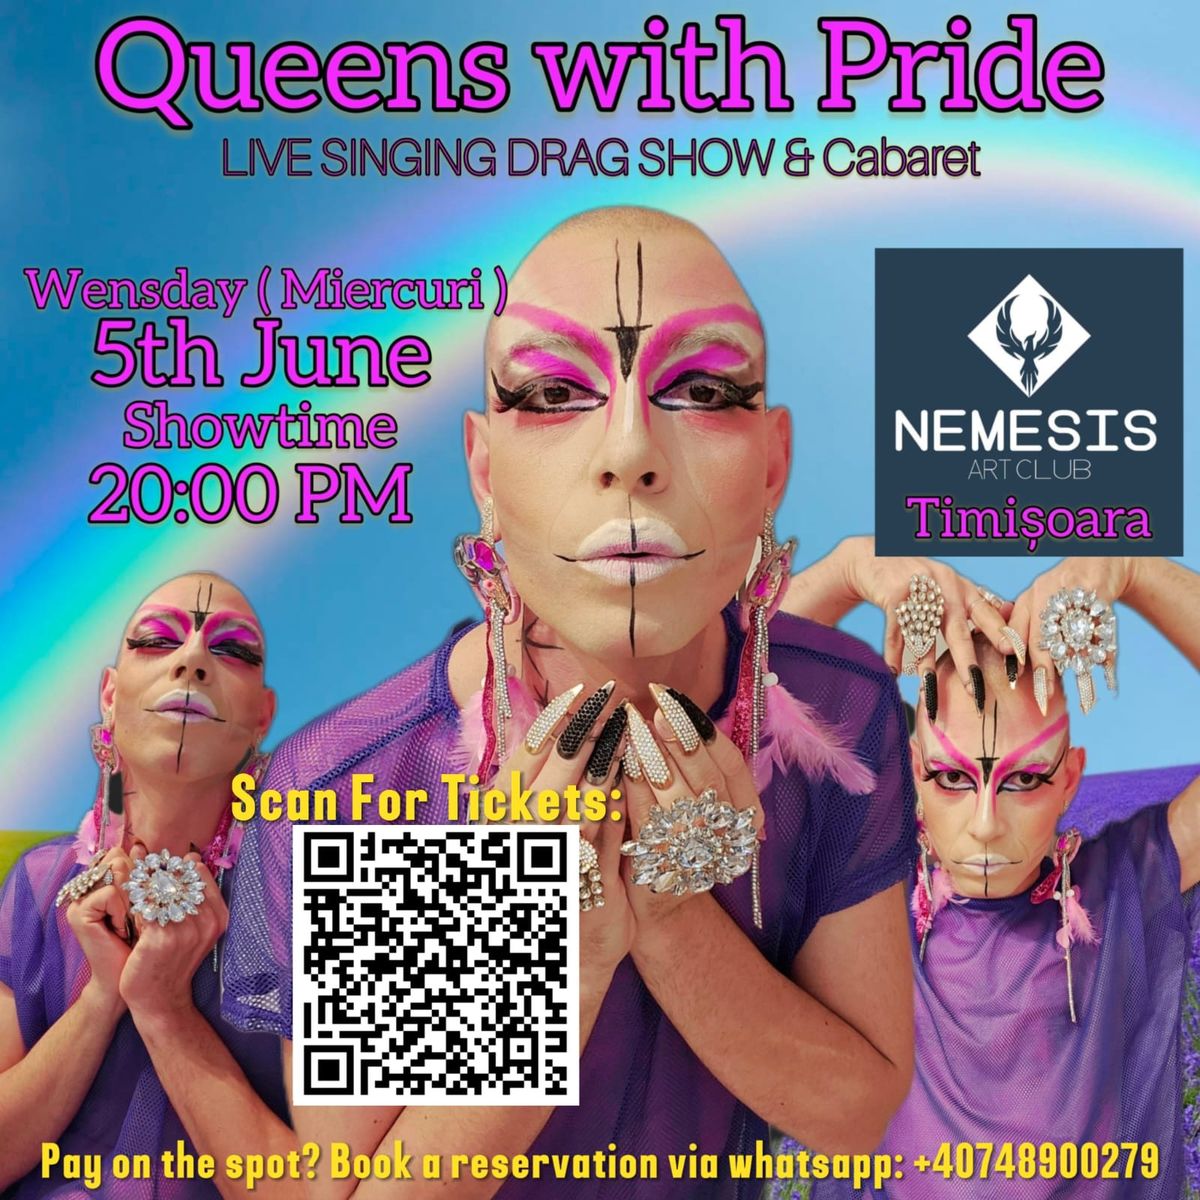 Queens with Pride, Nemesis Art Club, Timi\u0219oara